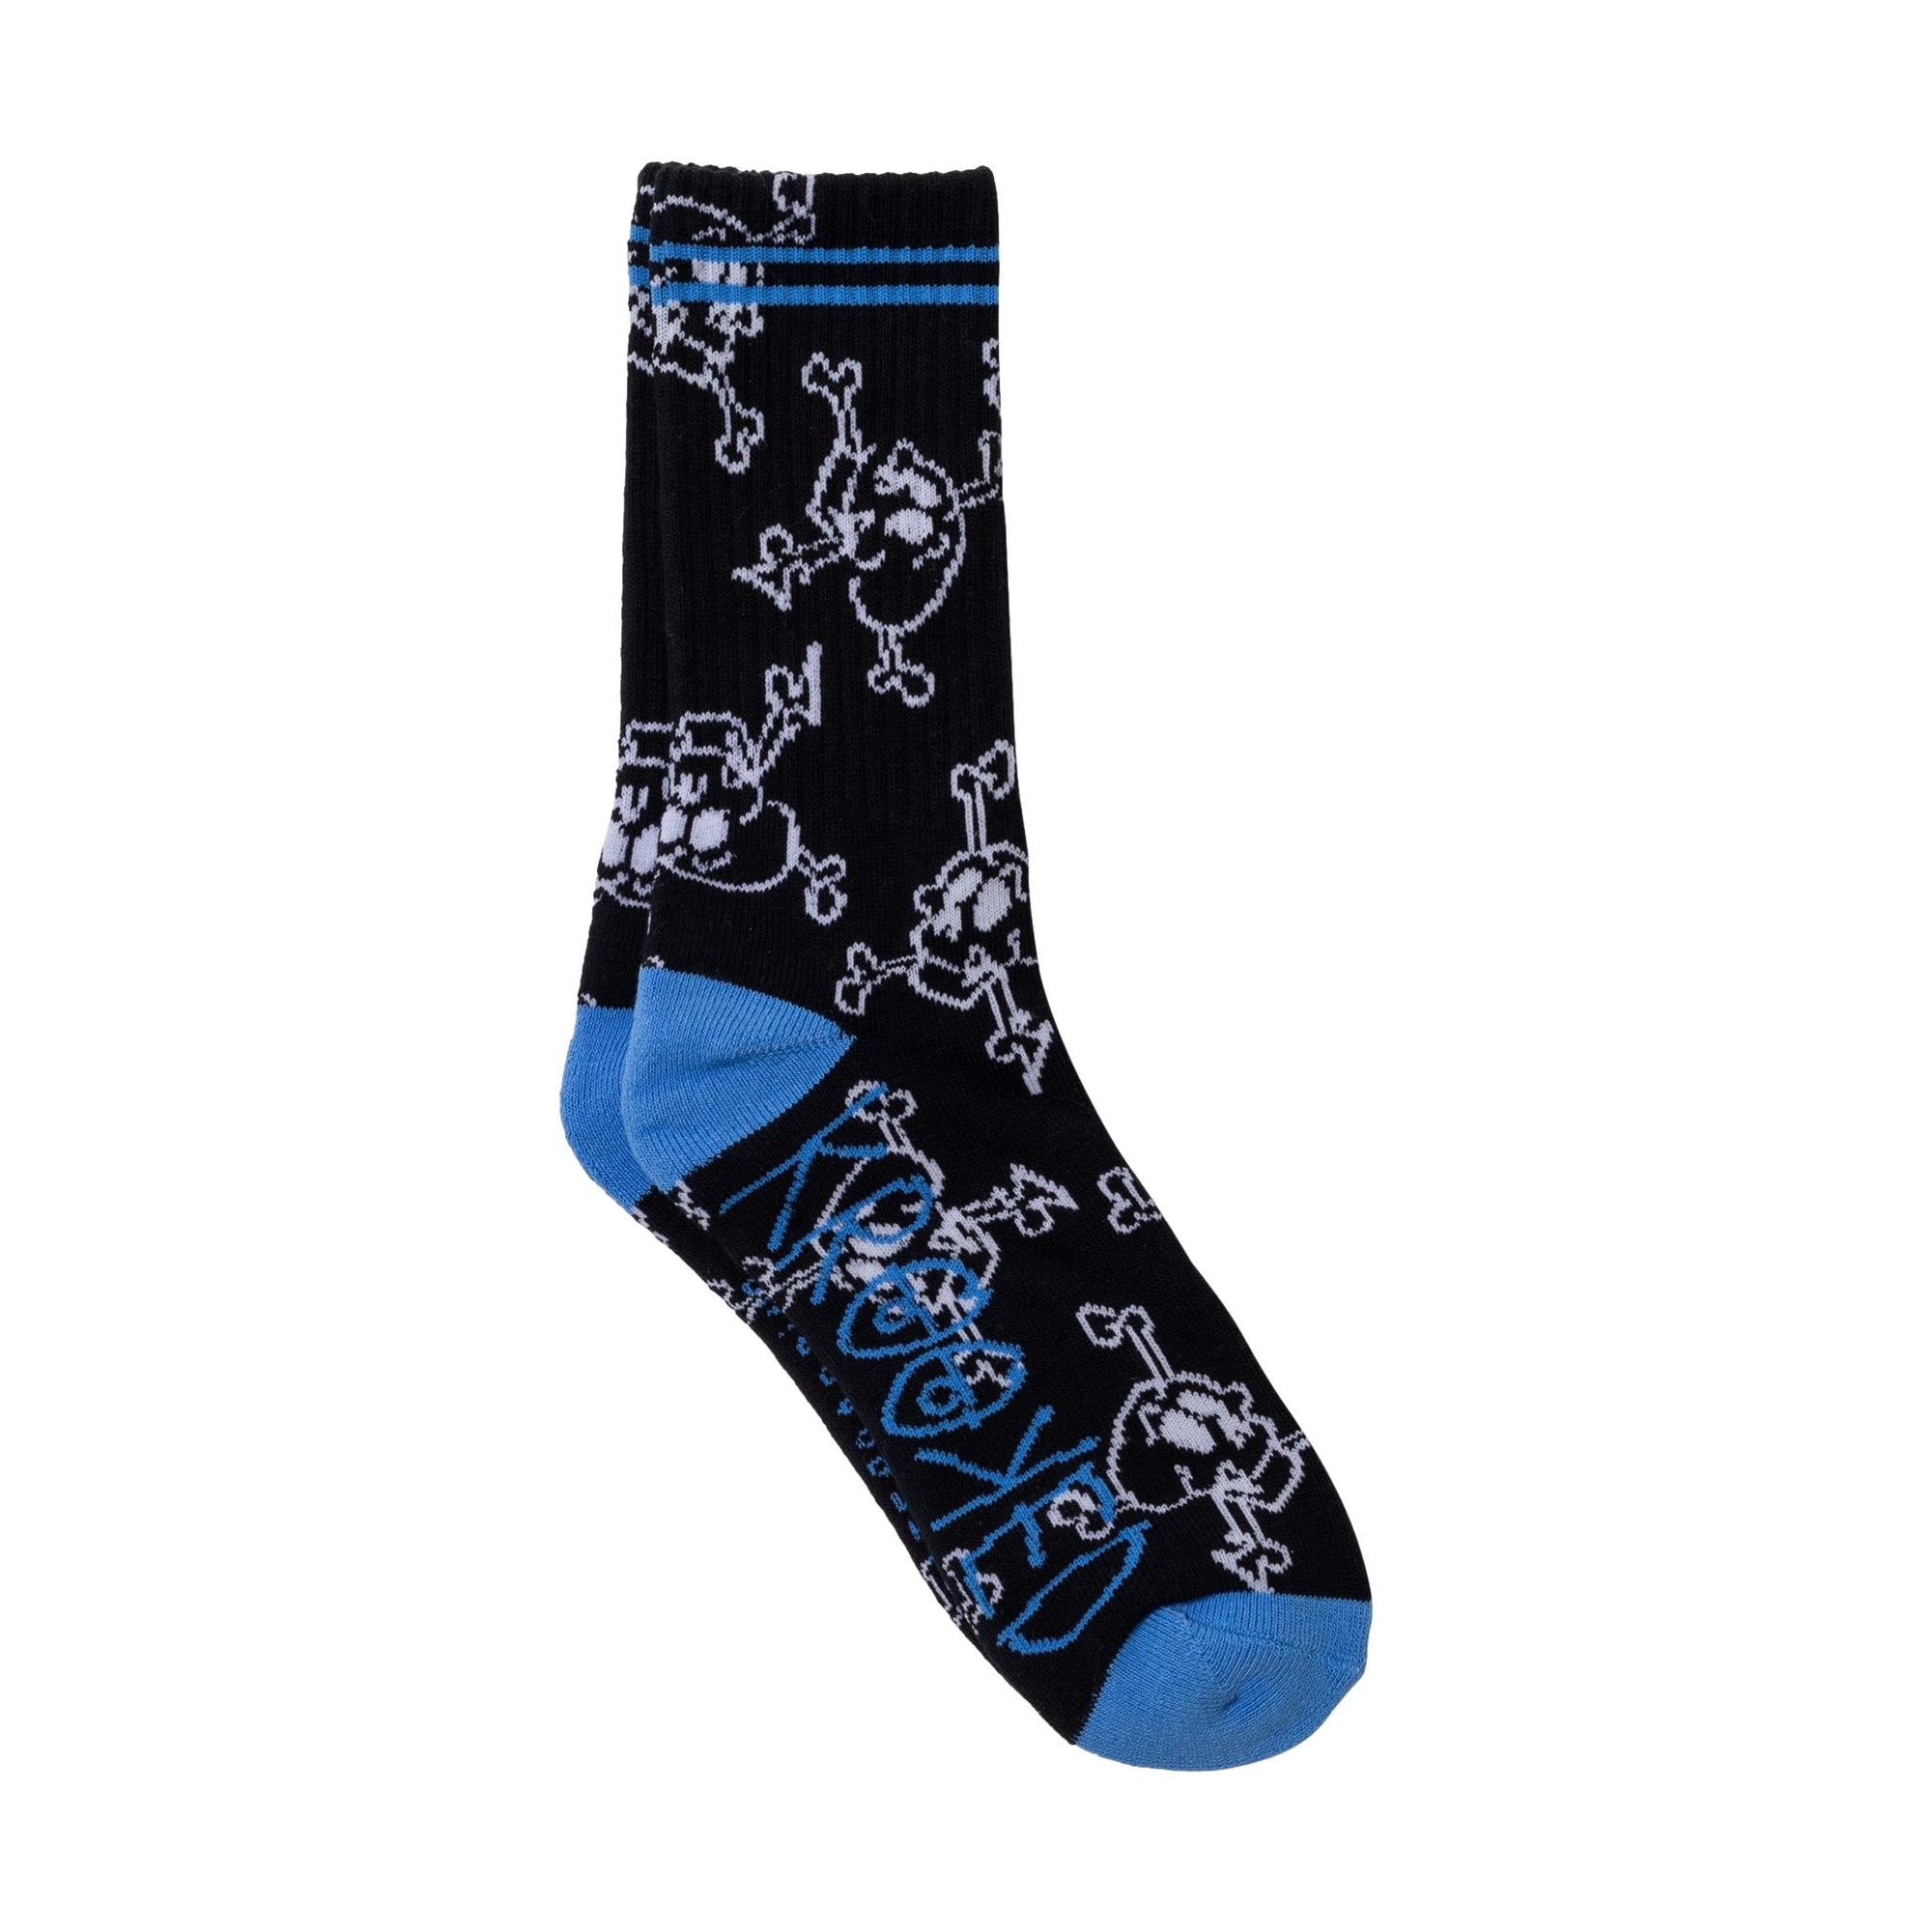 Krooked Style Socks Black/White/Blue - Venue Skateboards